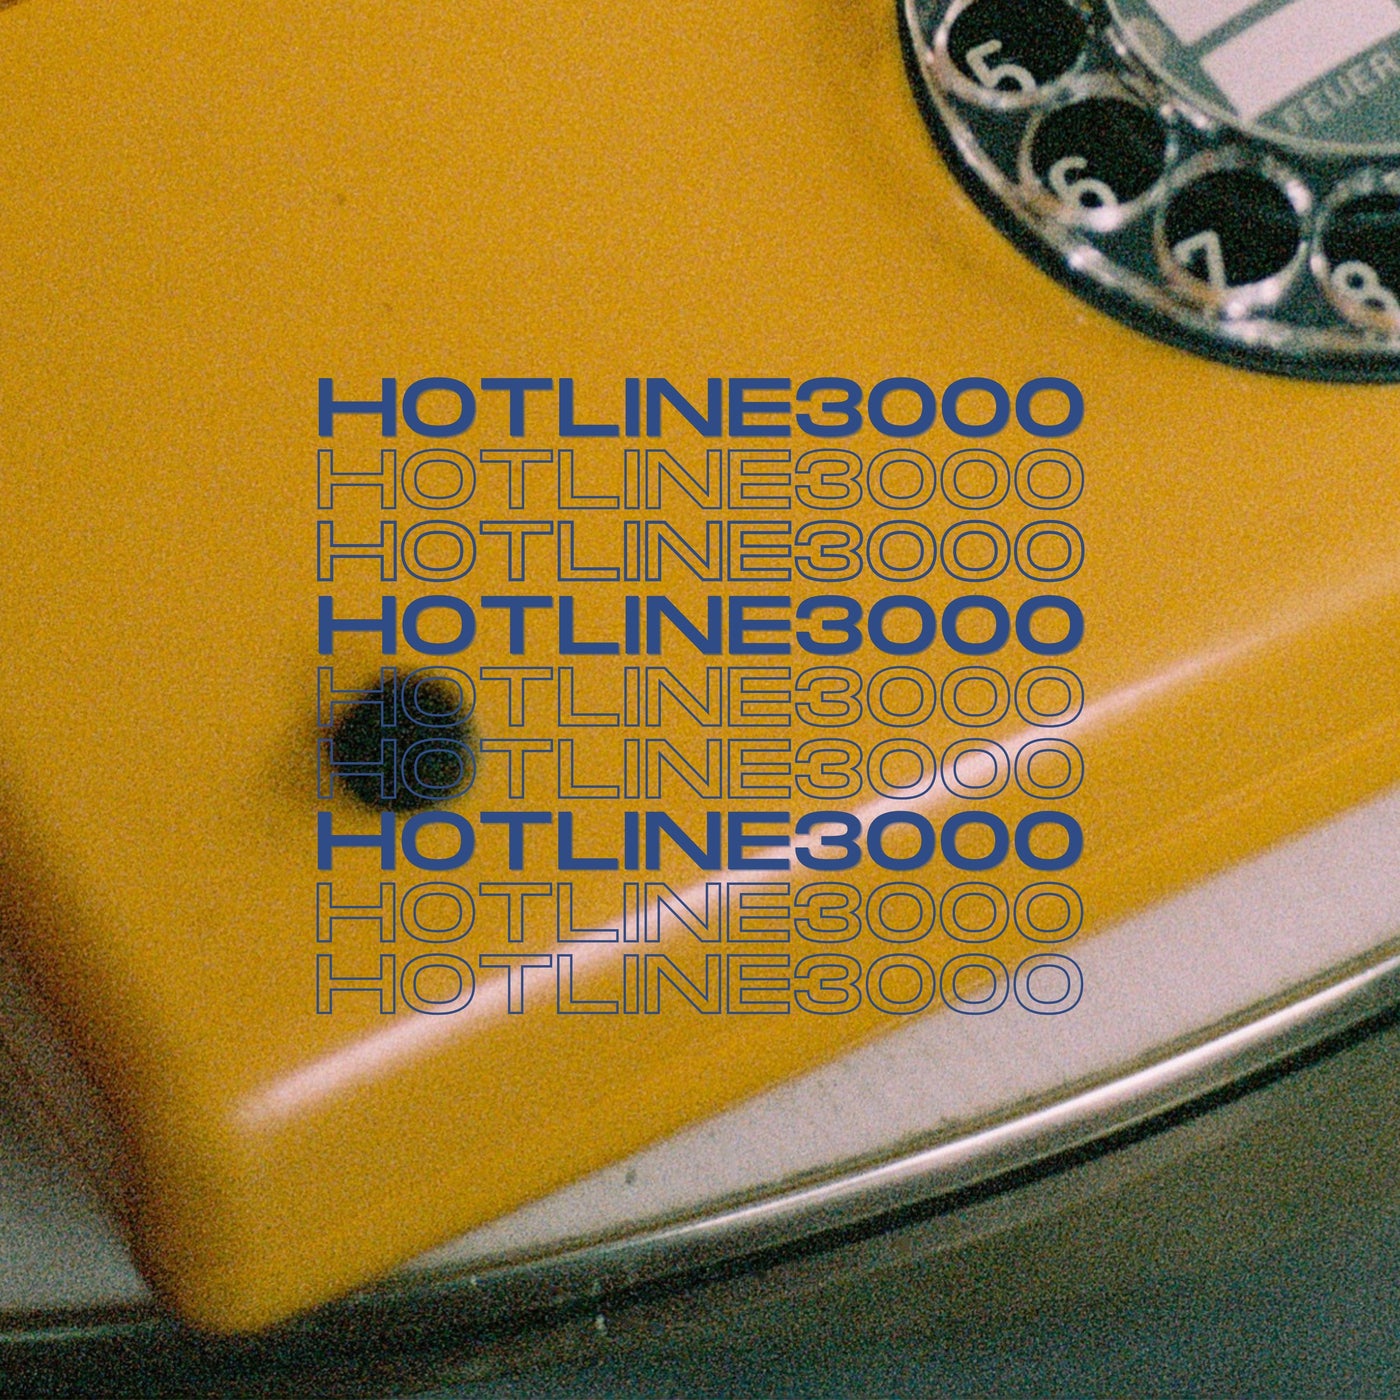 Hotline 3000